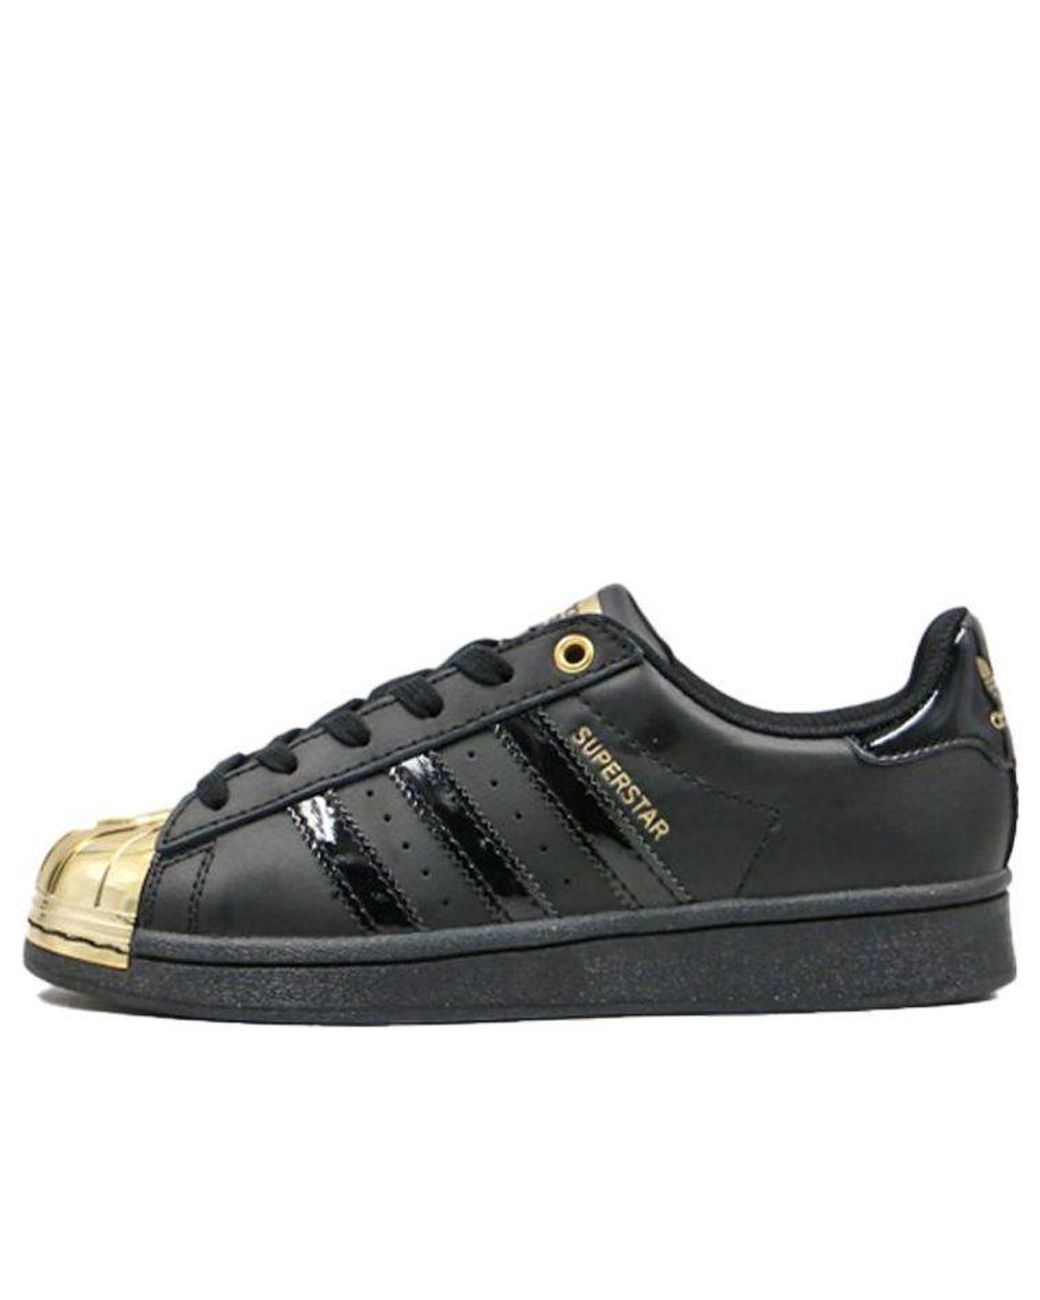 adidas Originals Adidas Superstar Metal Toe 'black Gold Metallic' | Lyst